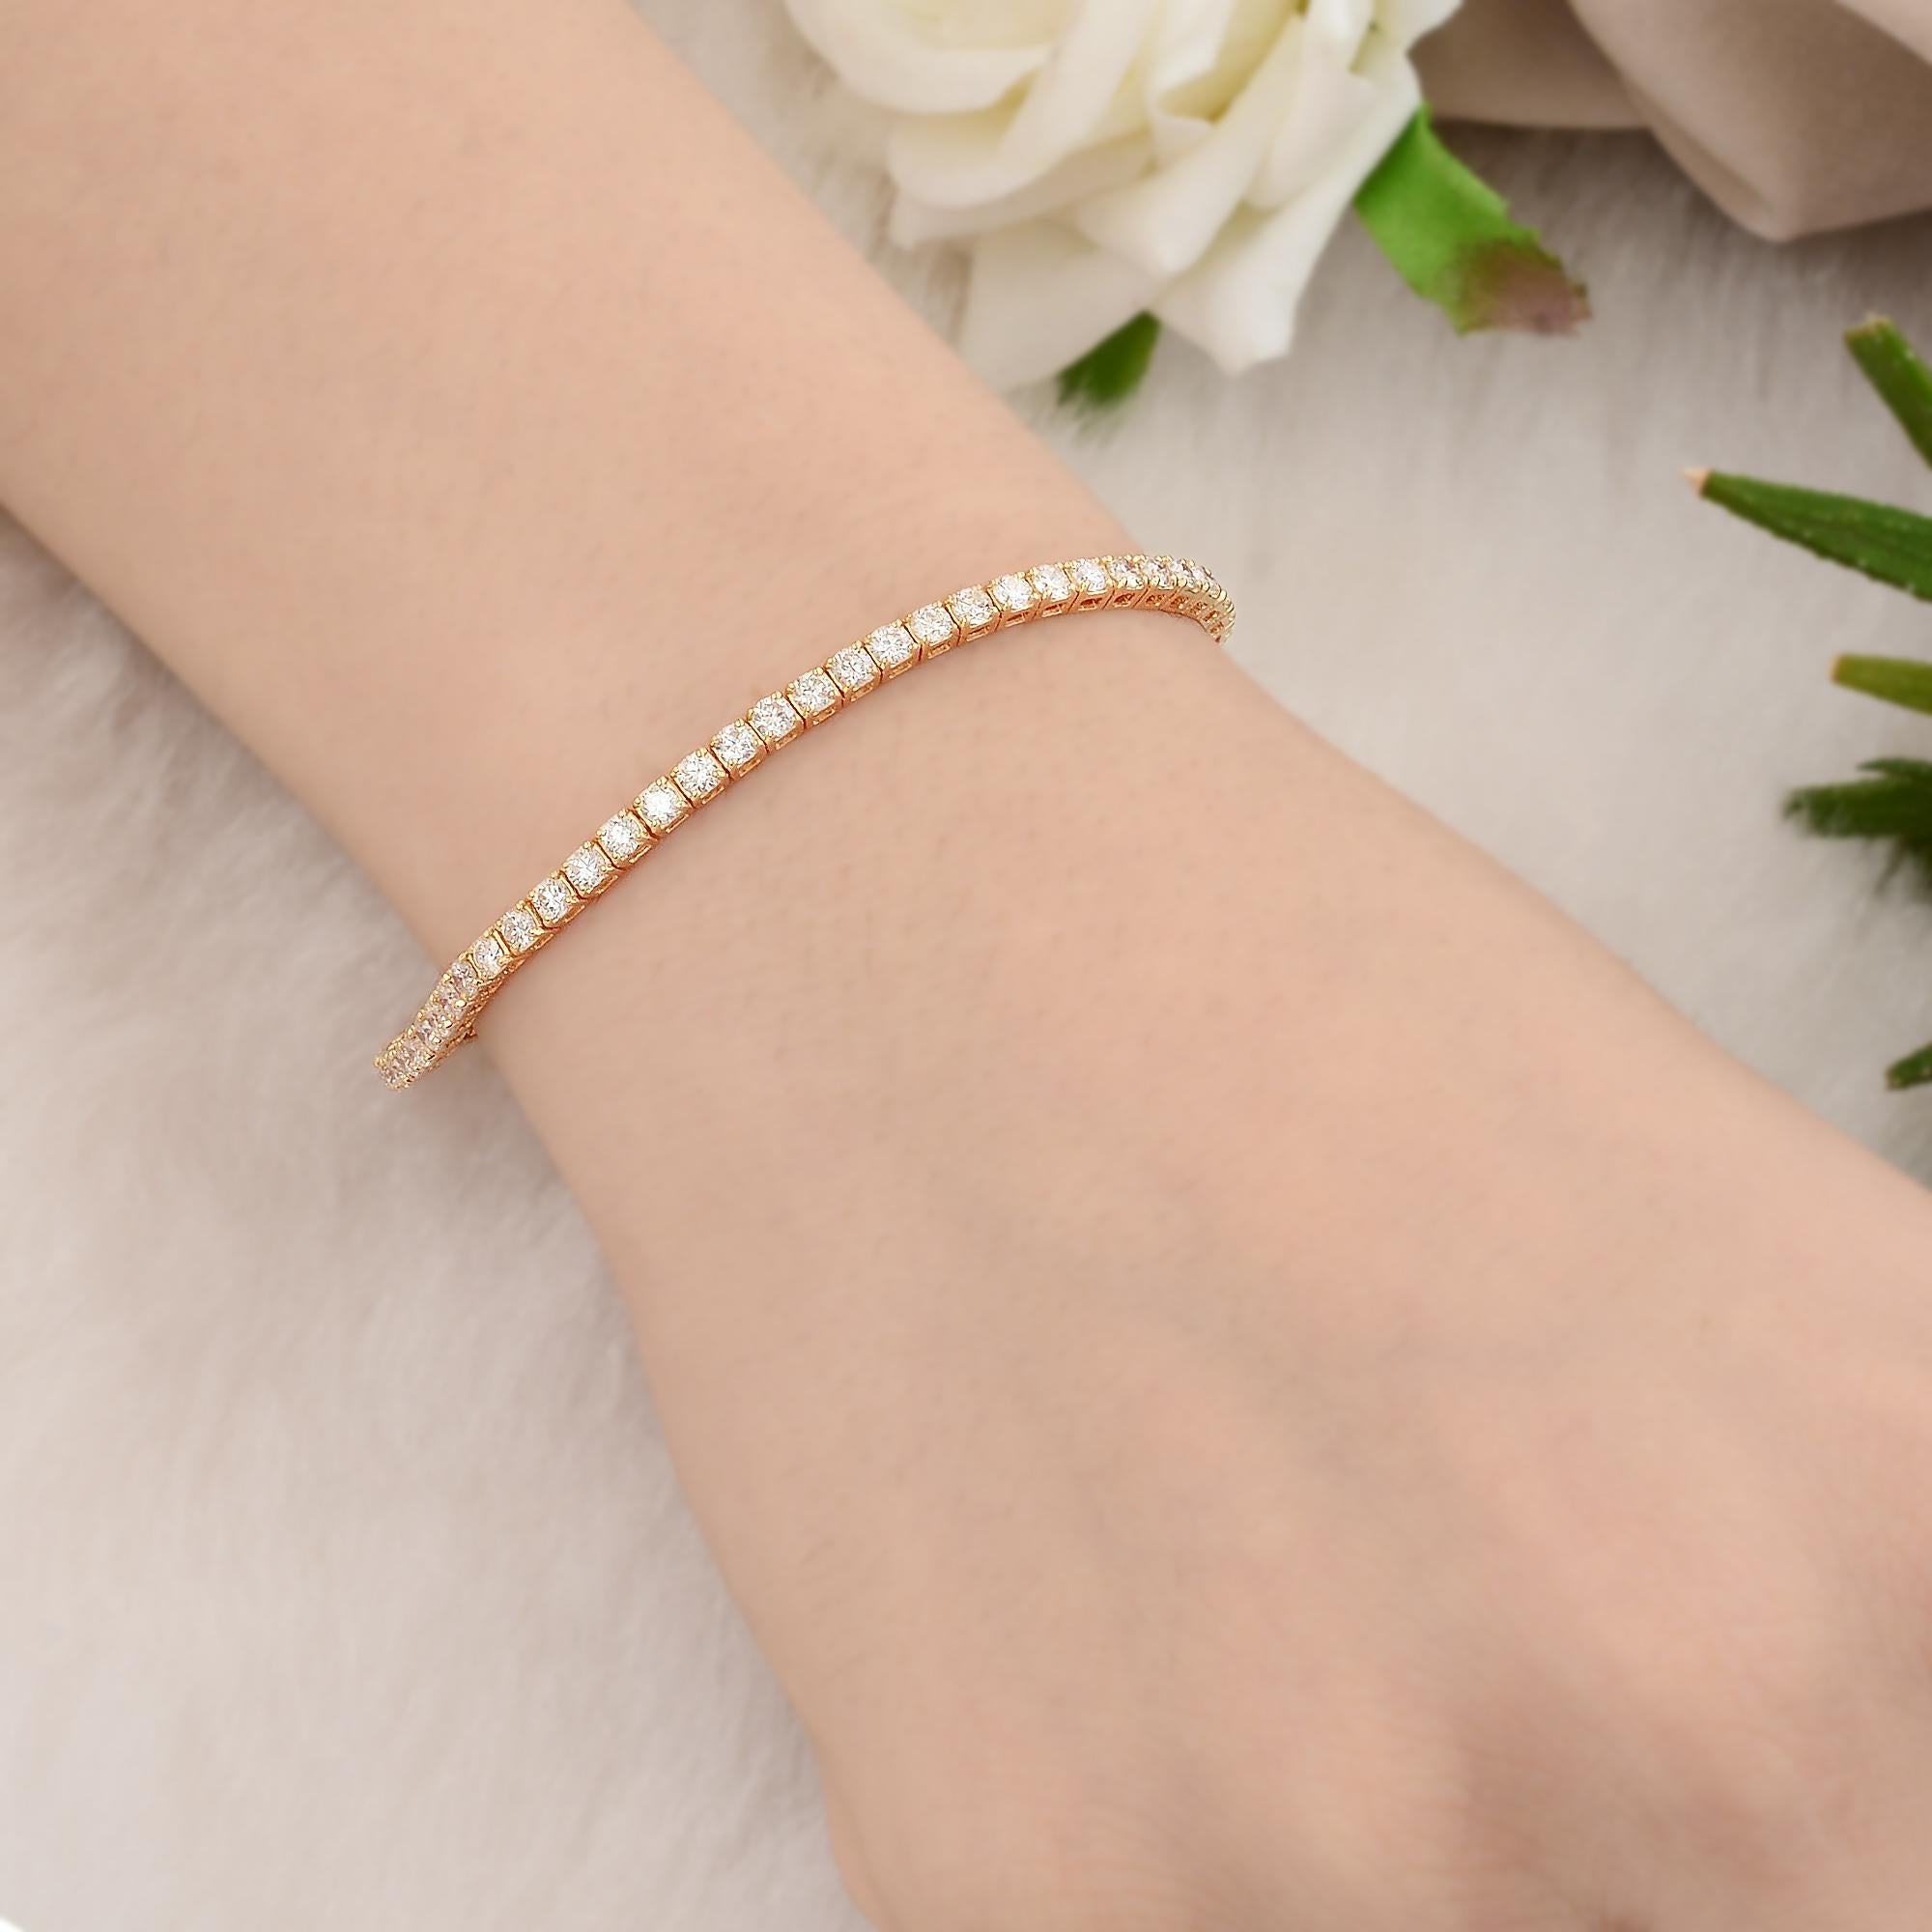 14 carat diamond tennis bracelet